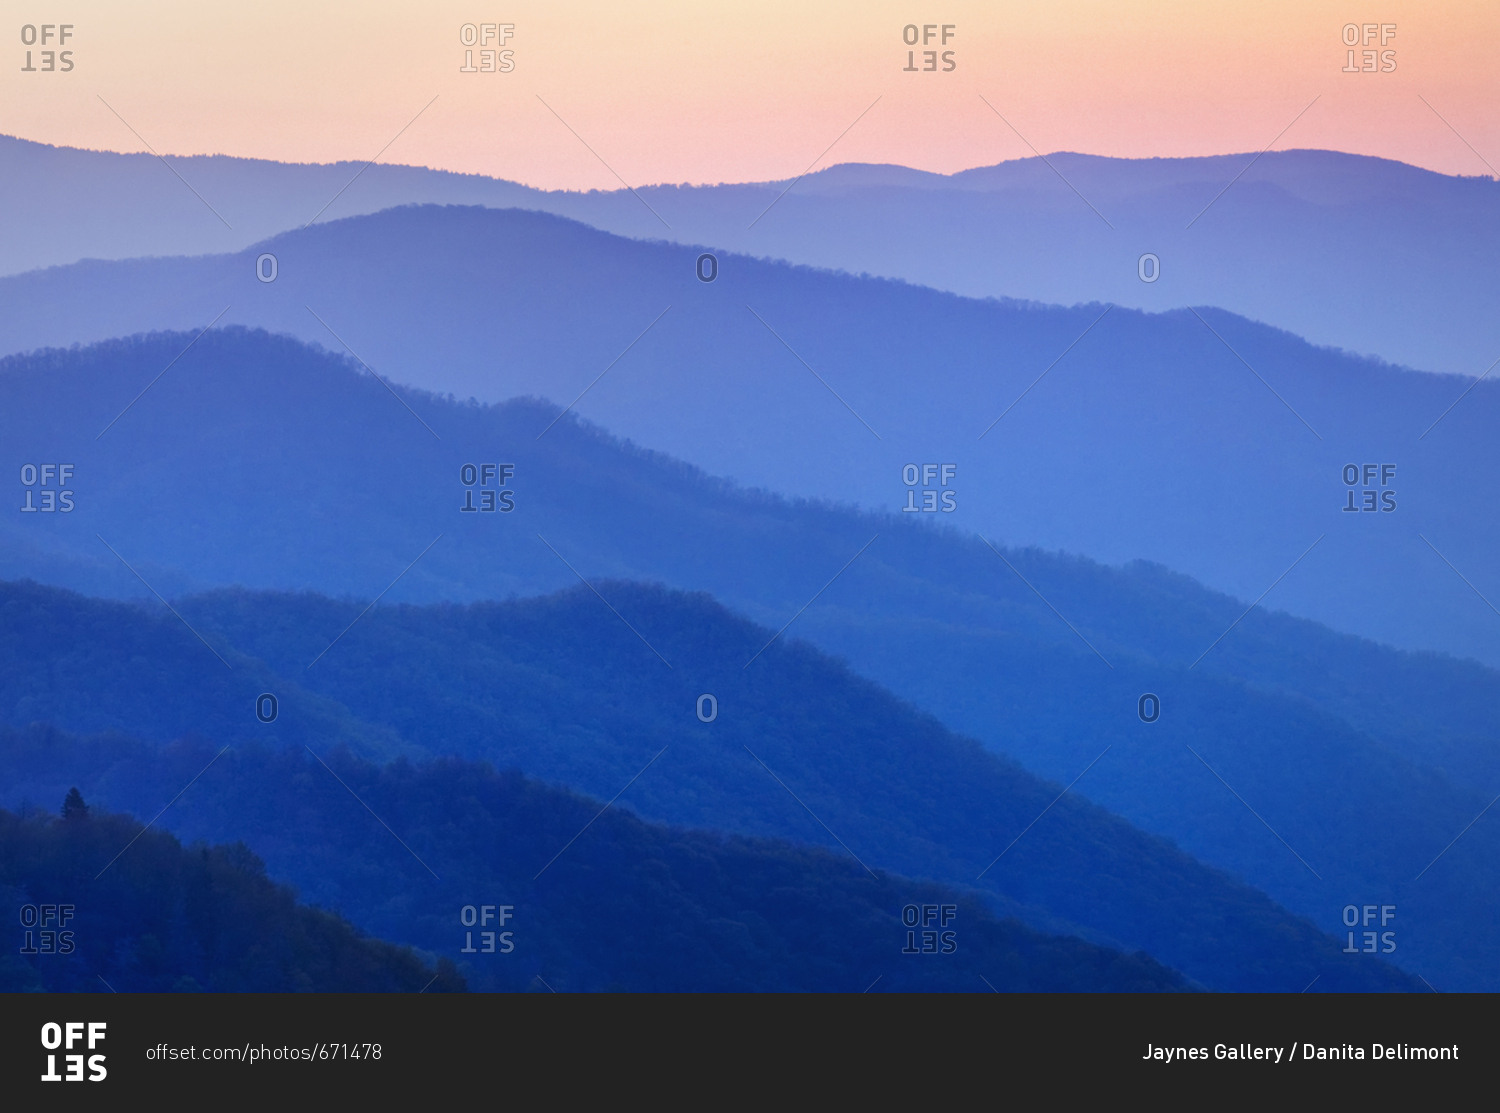 USA, North Carolina, Great Smoky Mountains National Park, Mountain landscape at sunrise